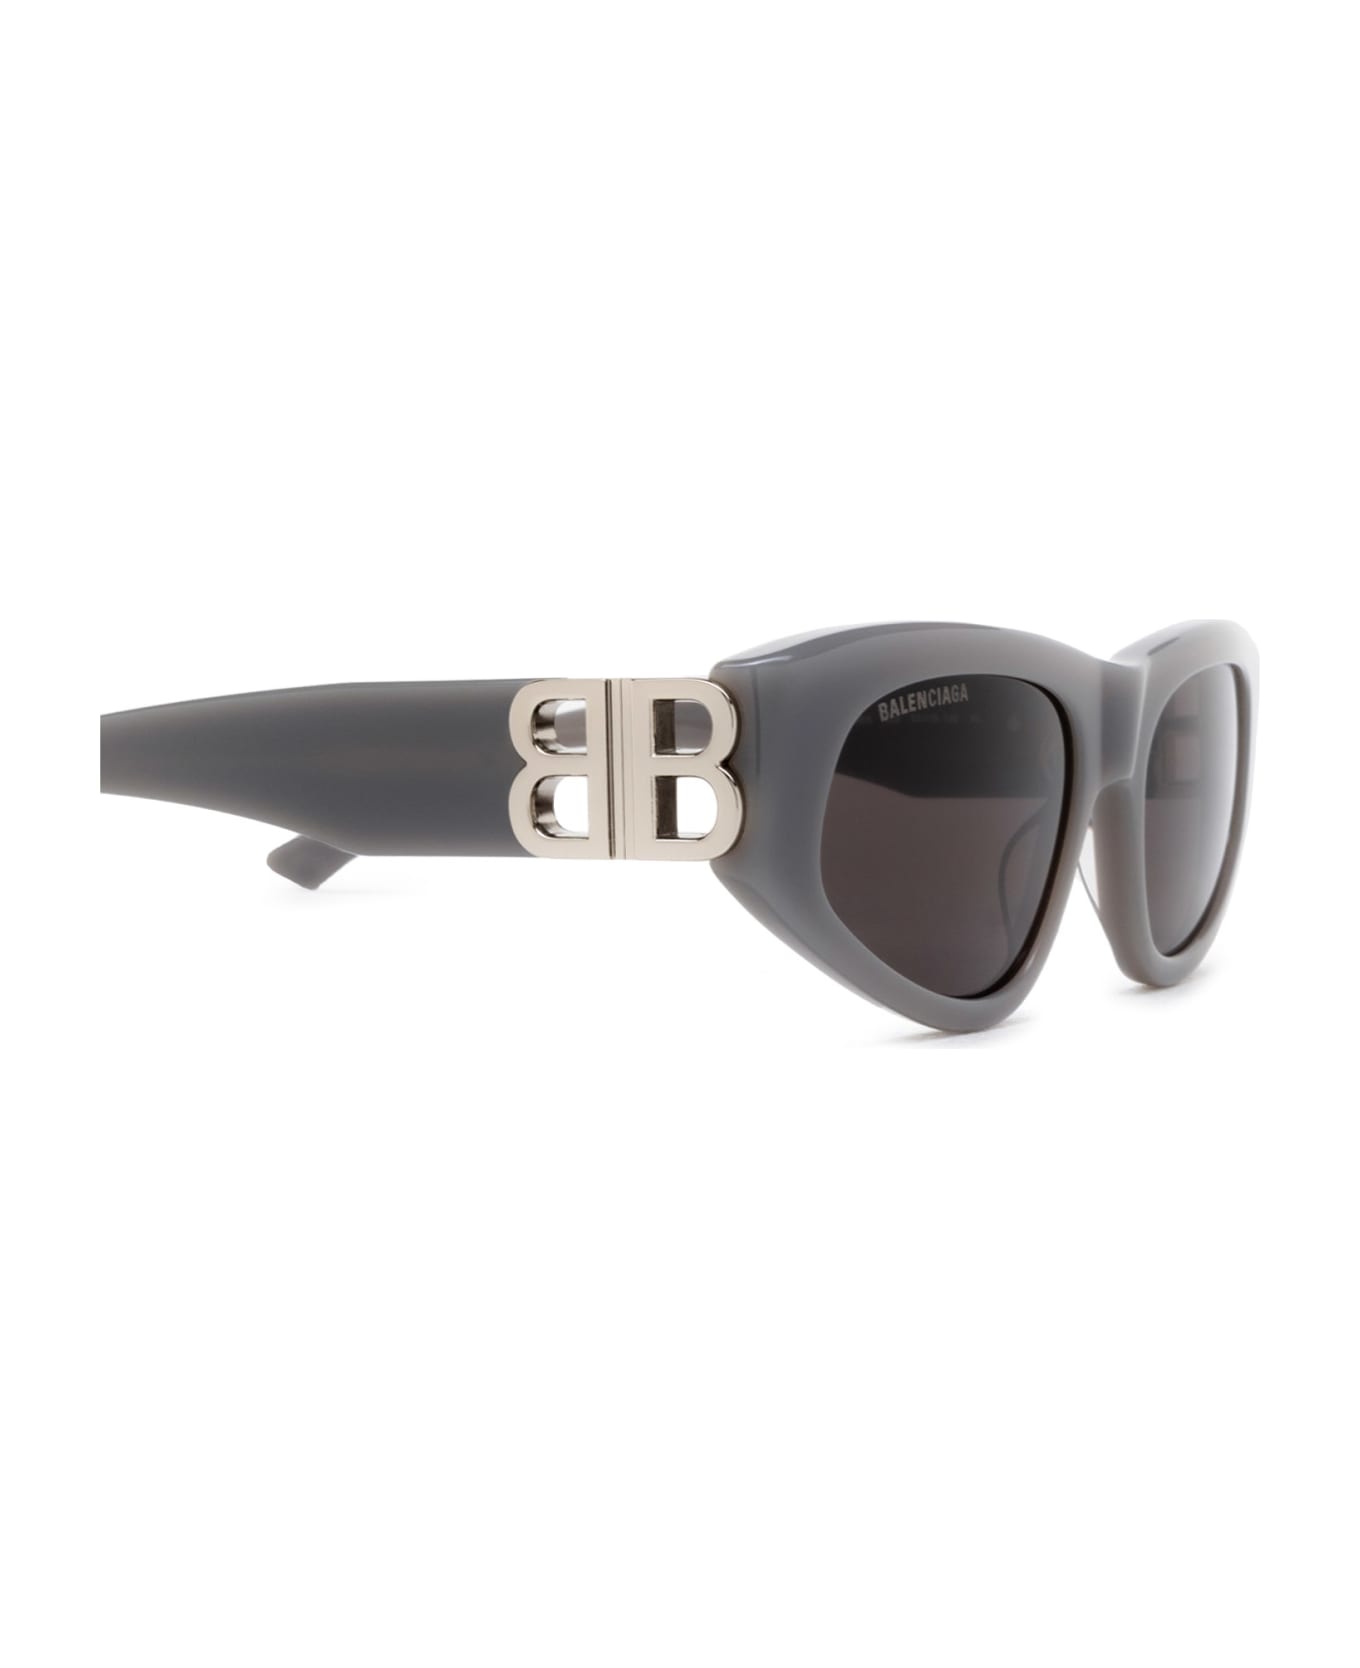 Balenciaga Eyewear Bb0095s Sunglasses - 015 GREY SILVER GREY